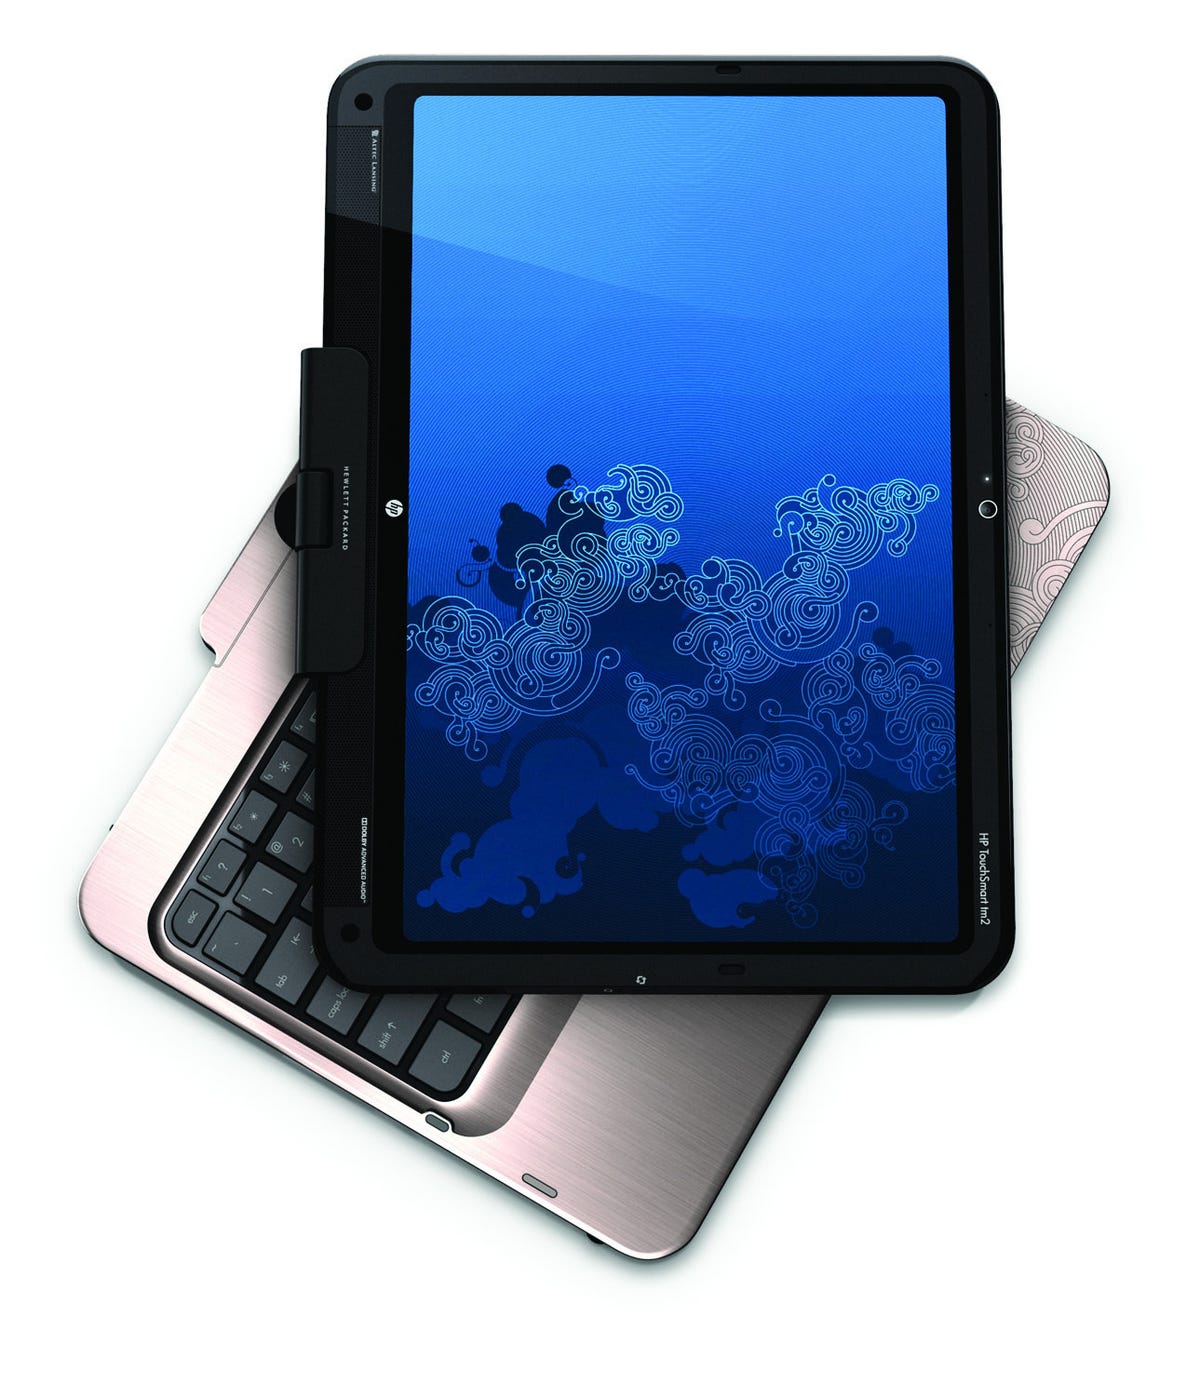 HP_TouchSmart_tm2,_tablet_PC,_tablet_open_front_facing_on_white.jpg